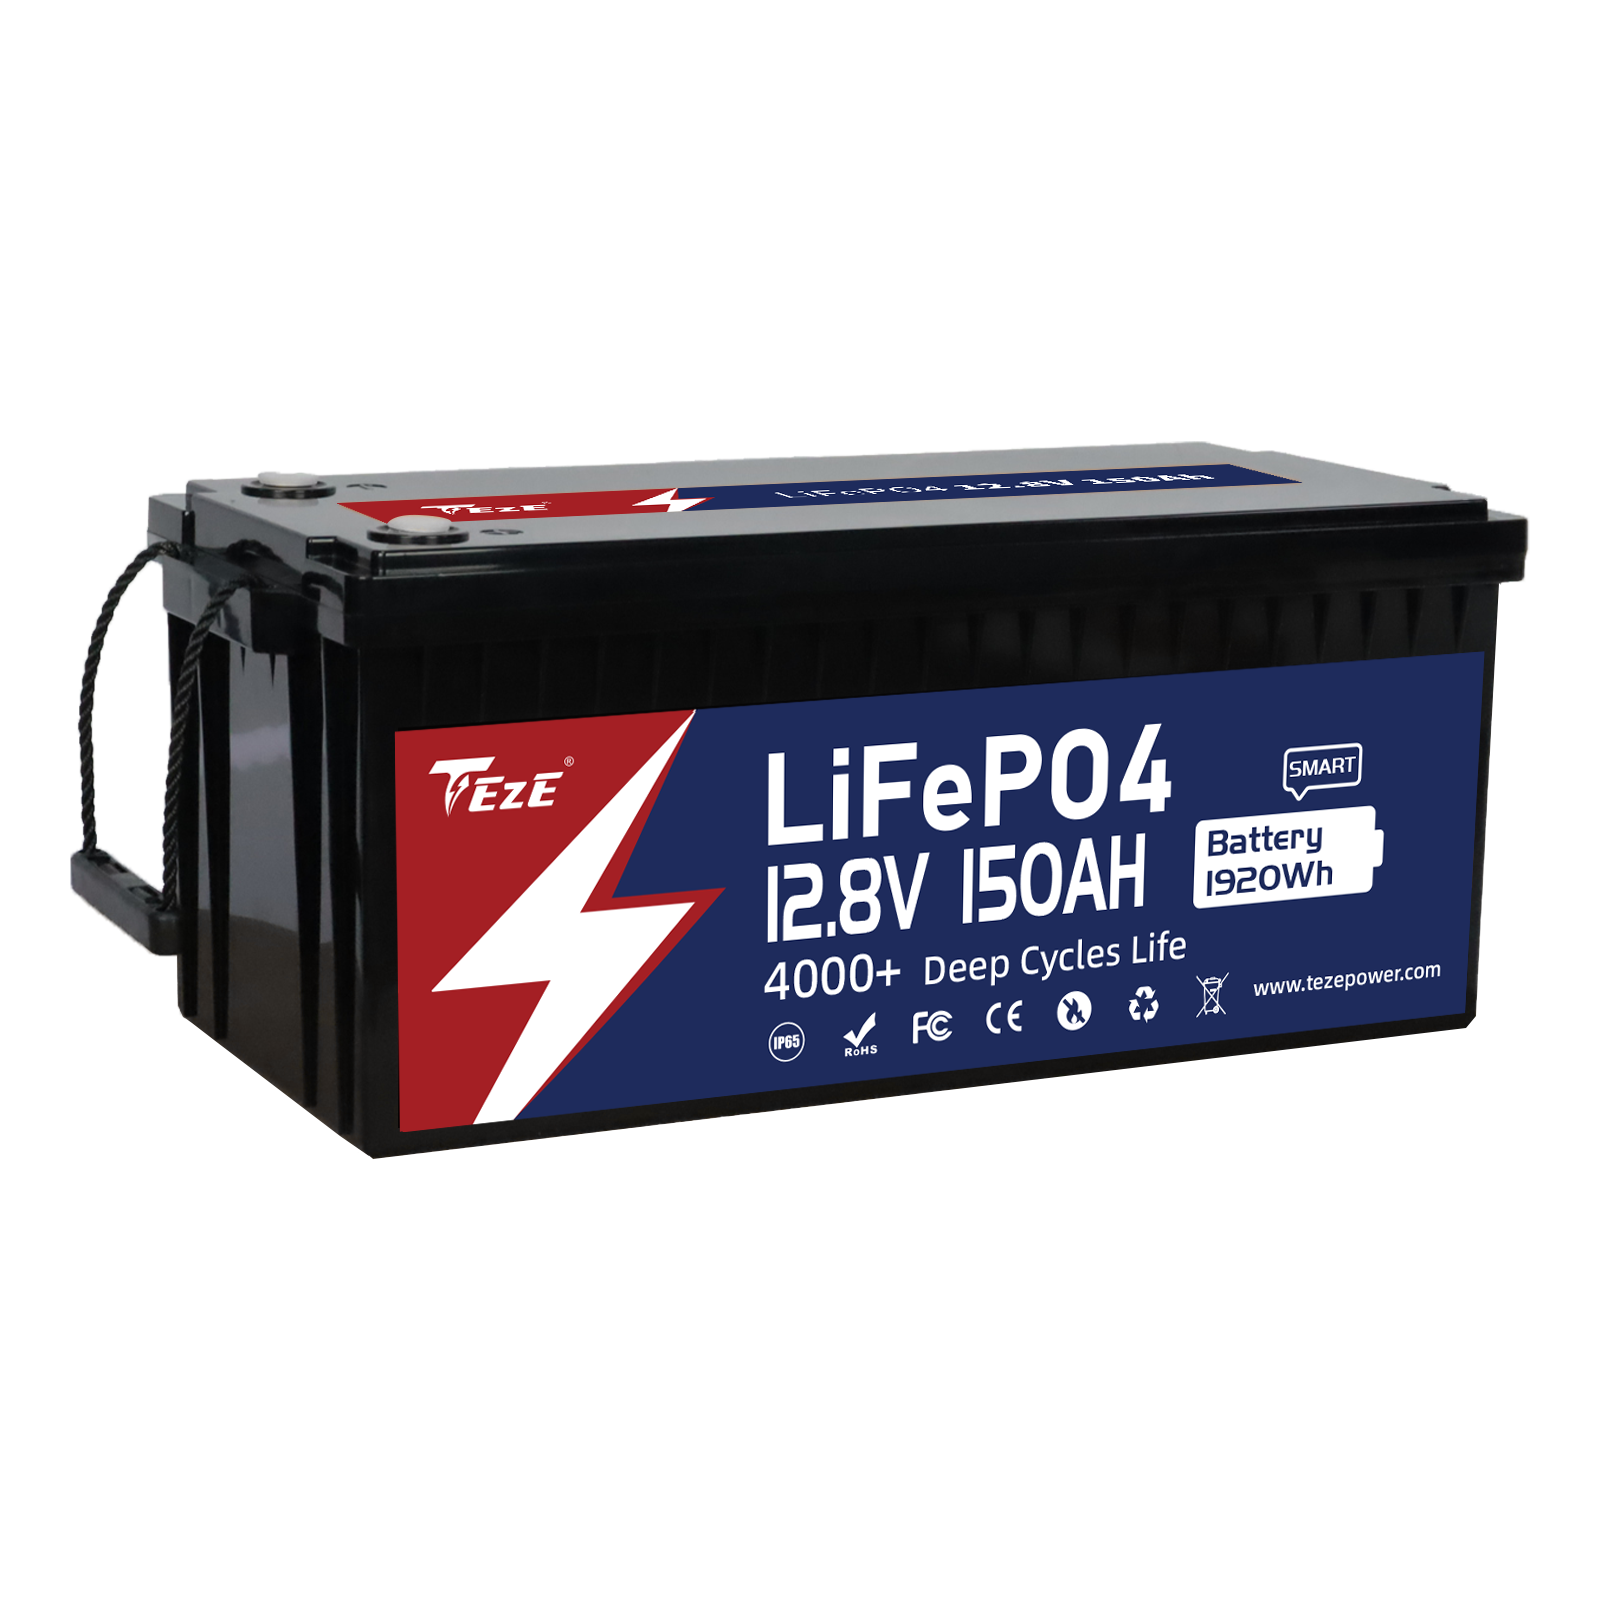 LiFePO4 12V 150Ah Lithium Iron Phosphate Battery